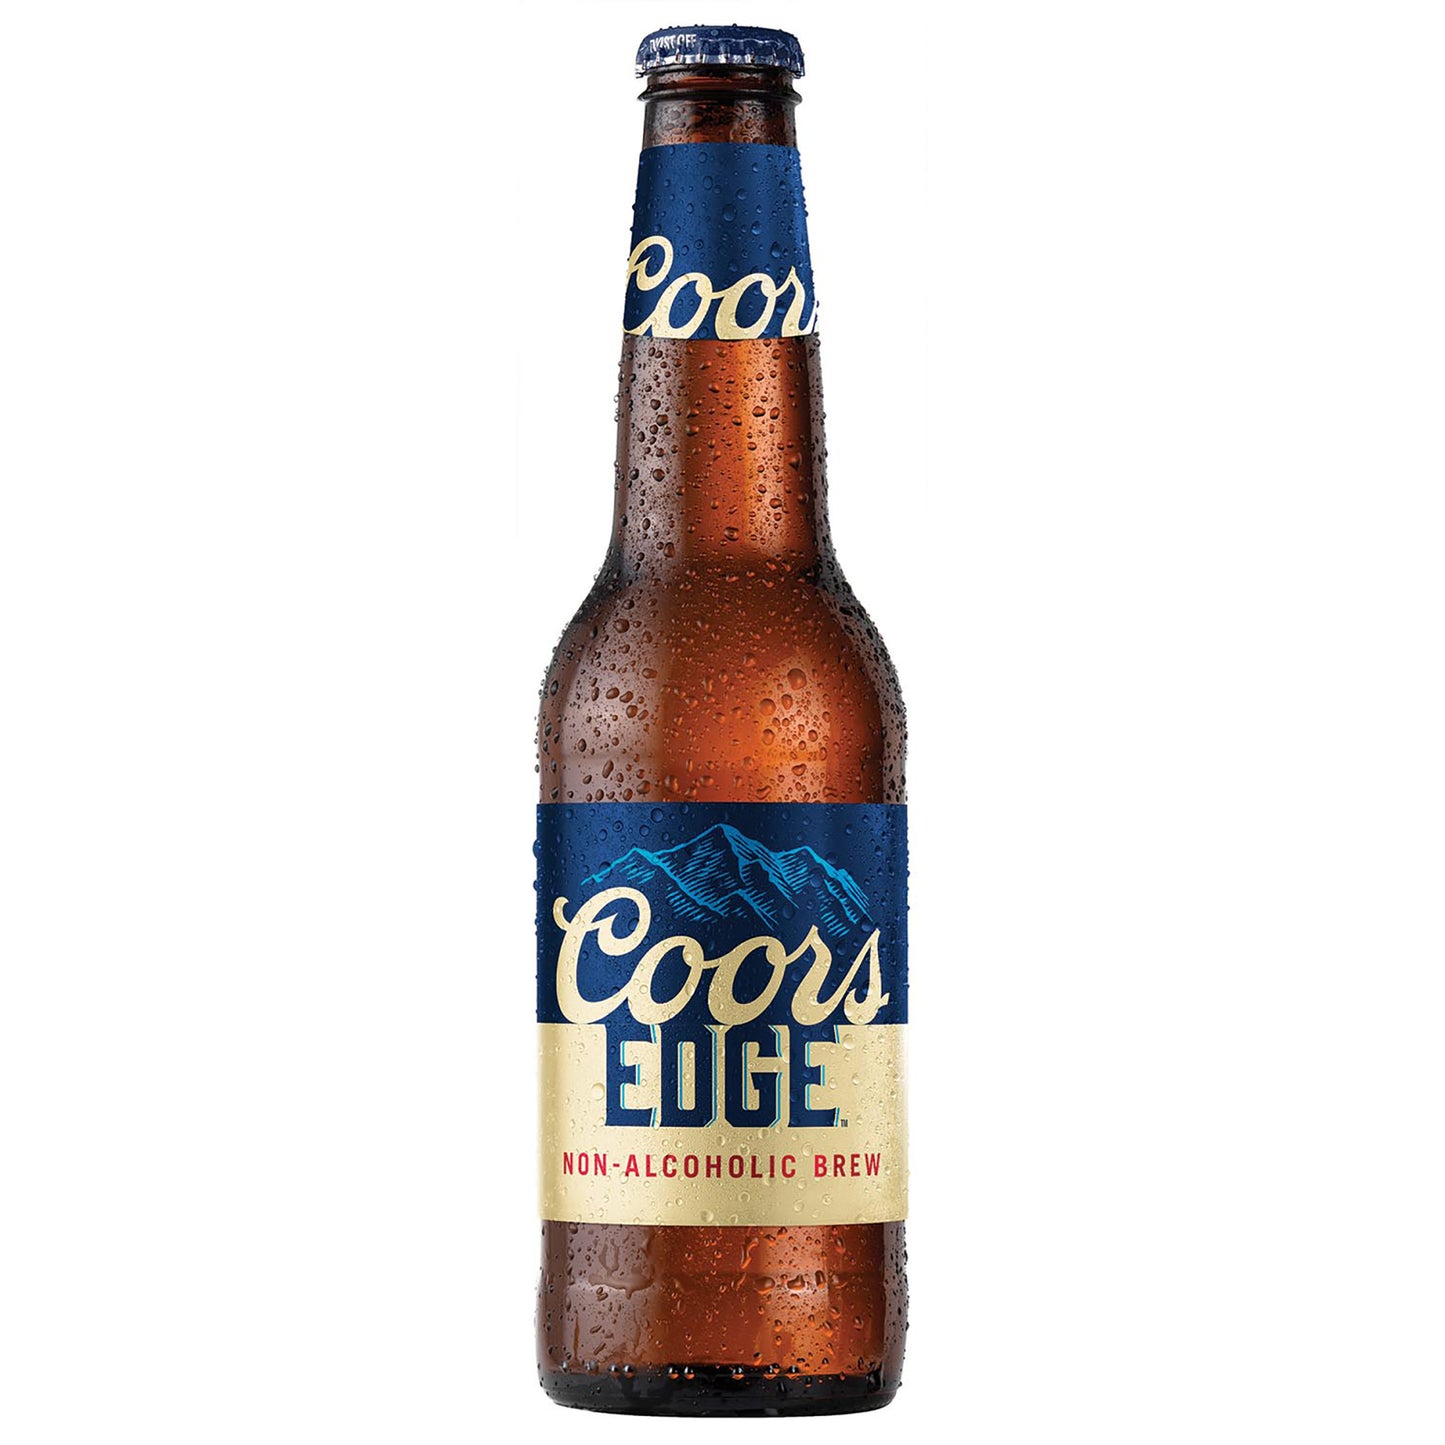 Coors - Edge Non-Alcoholic Brew